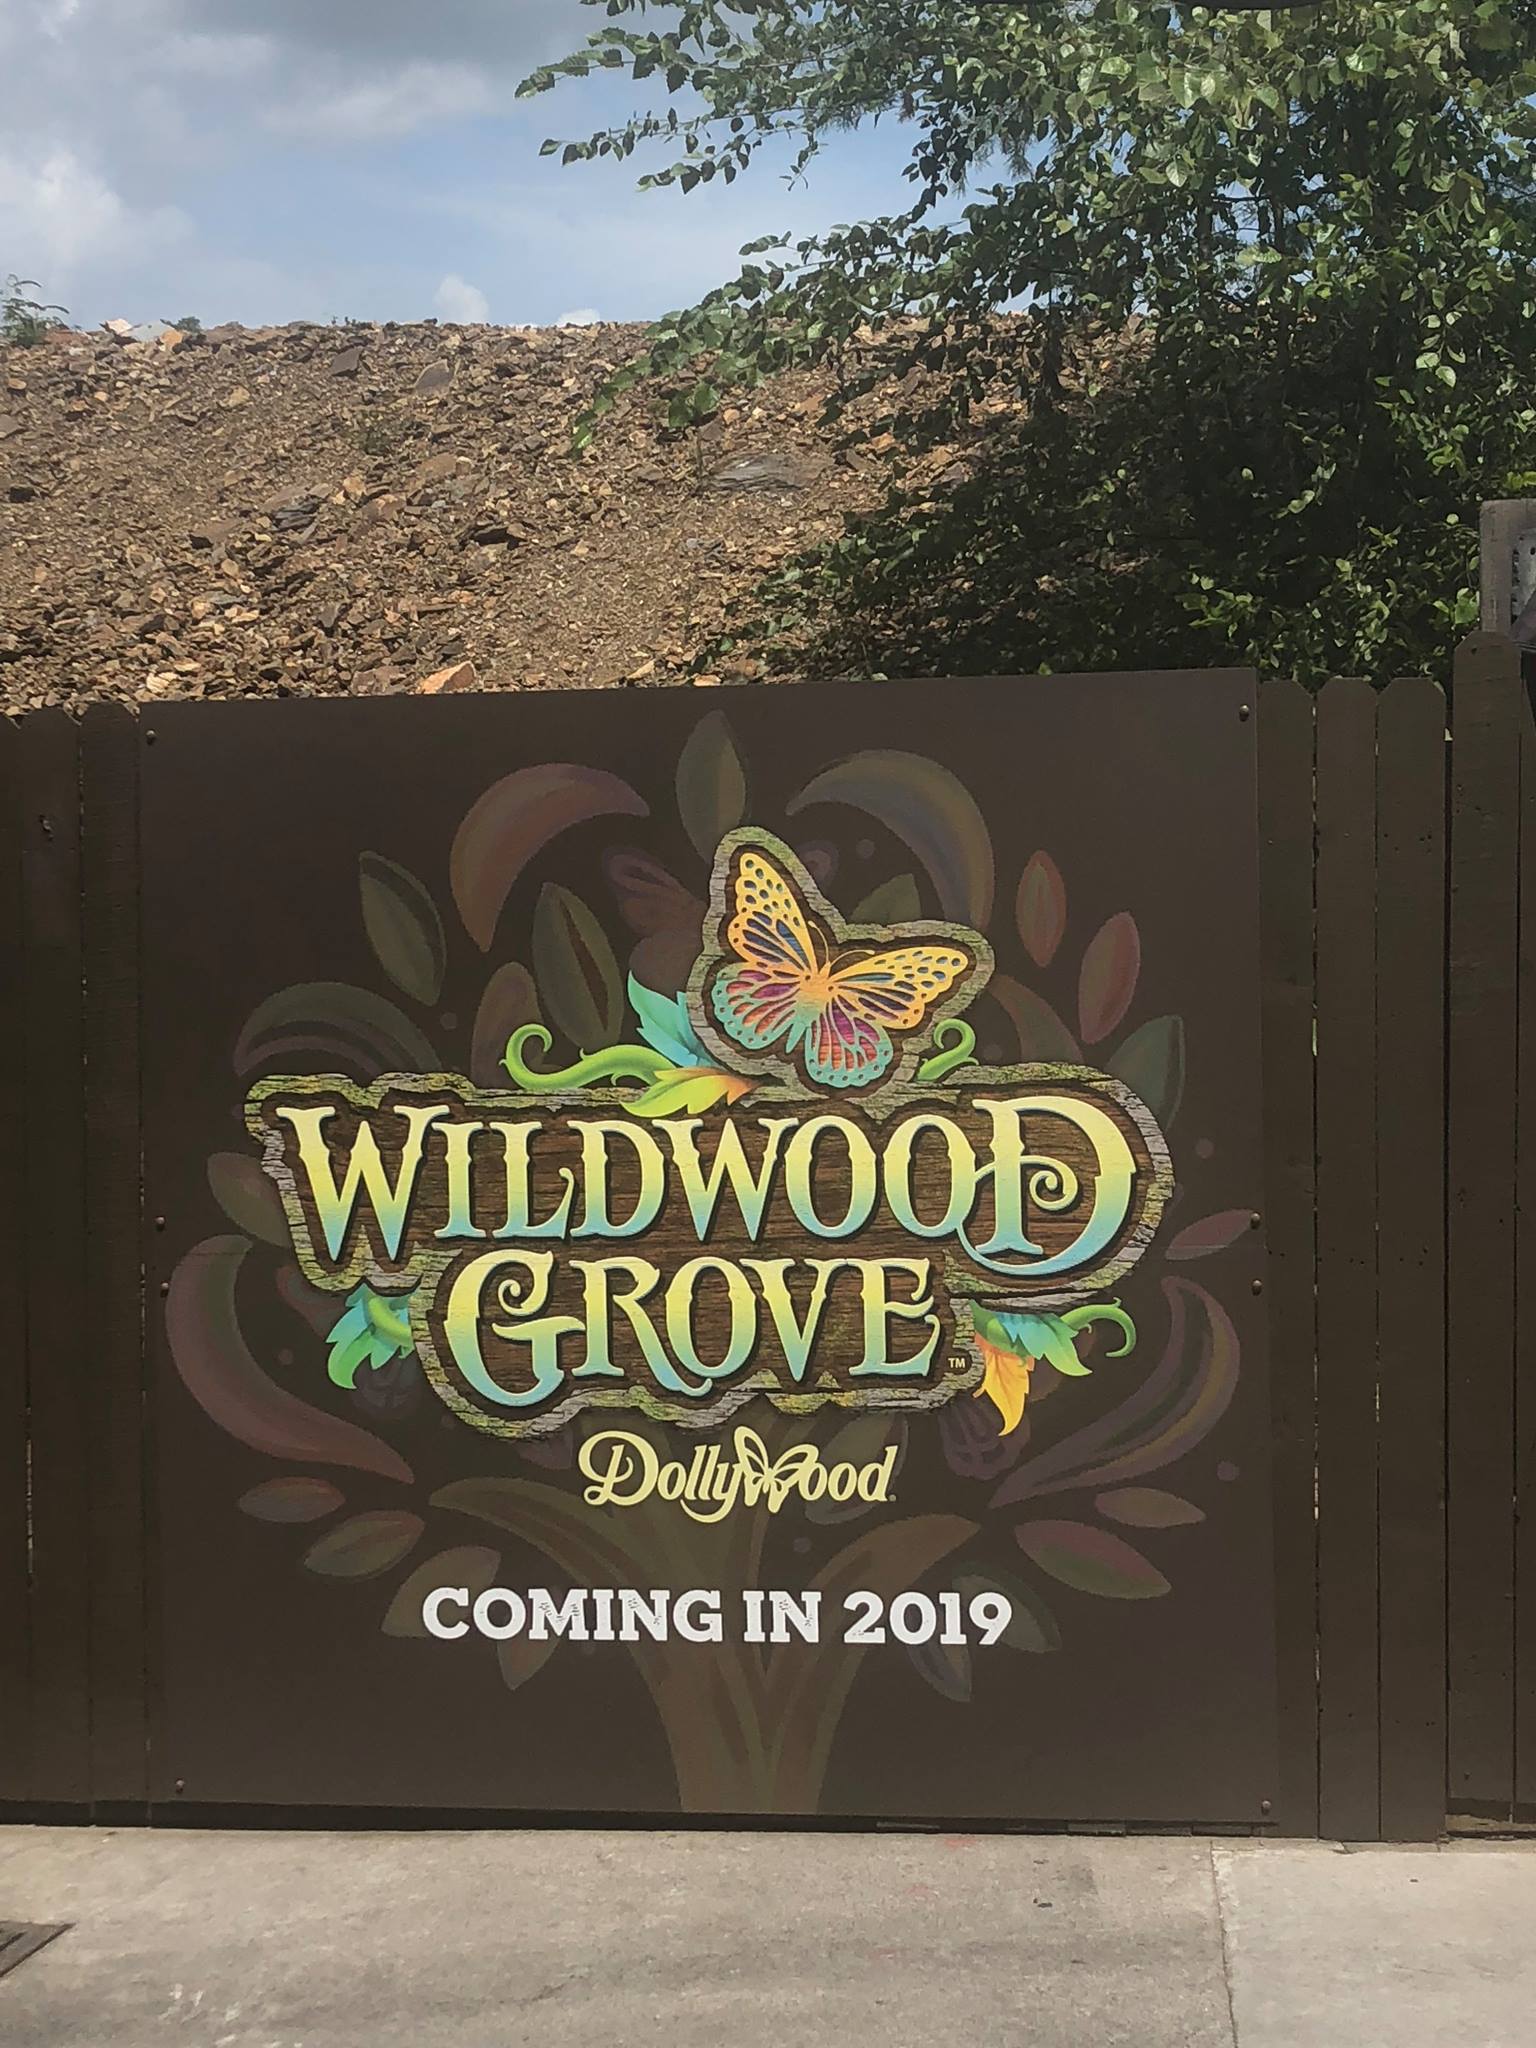 wildwood grove sign showing coming soon